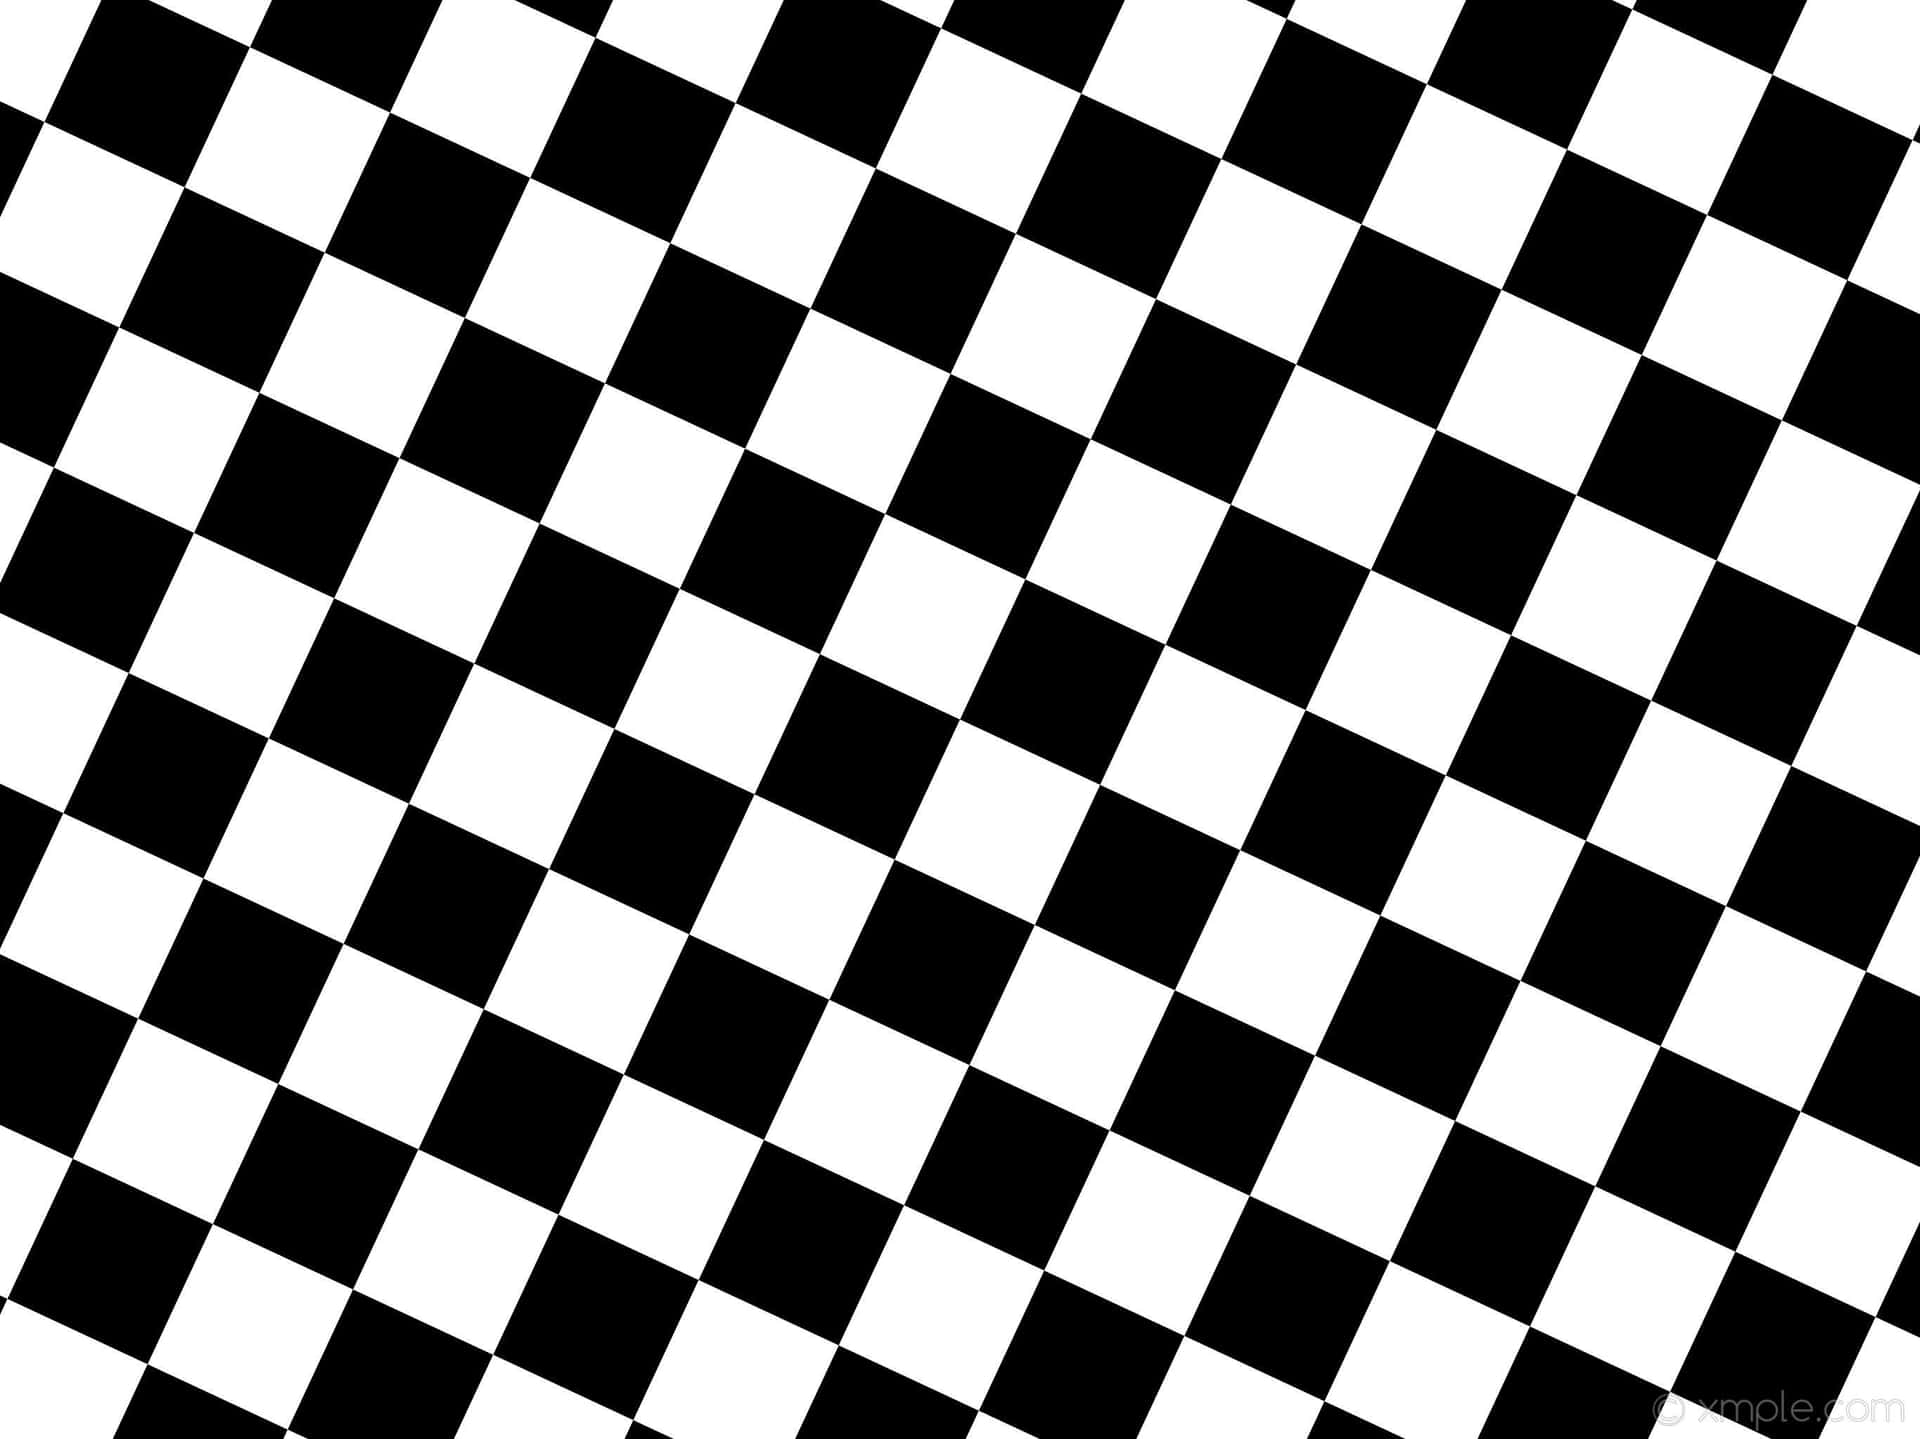 Checkered Flag!